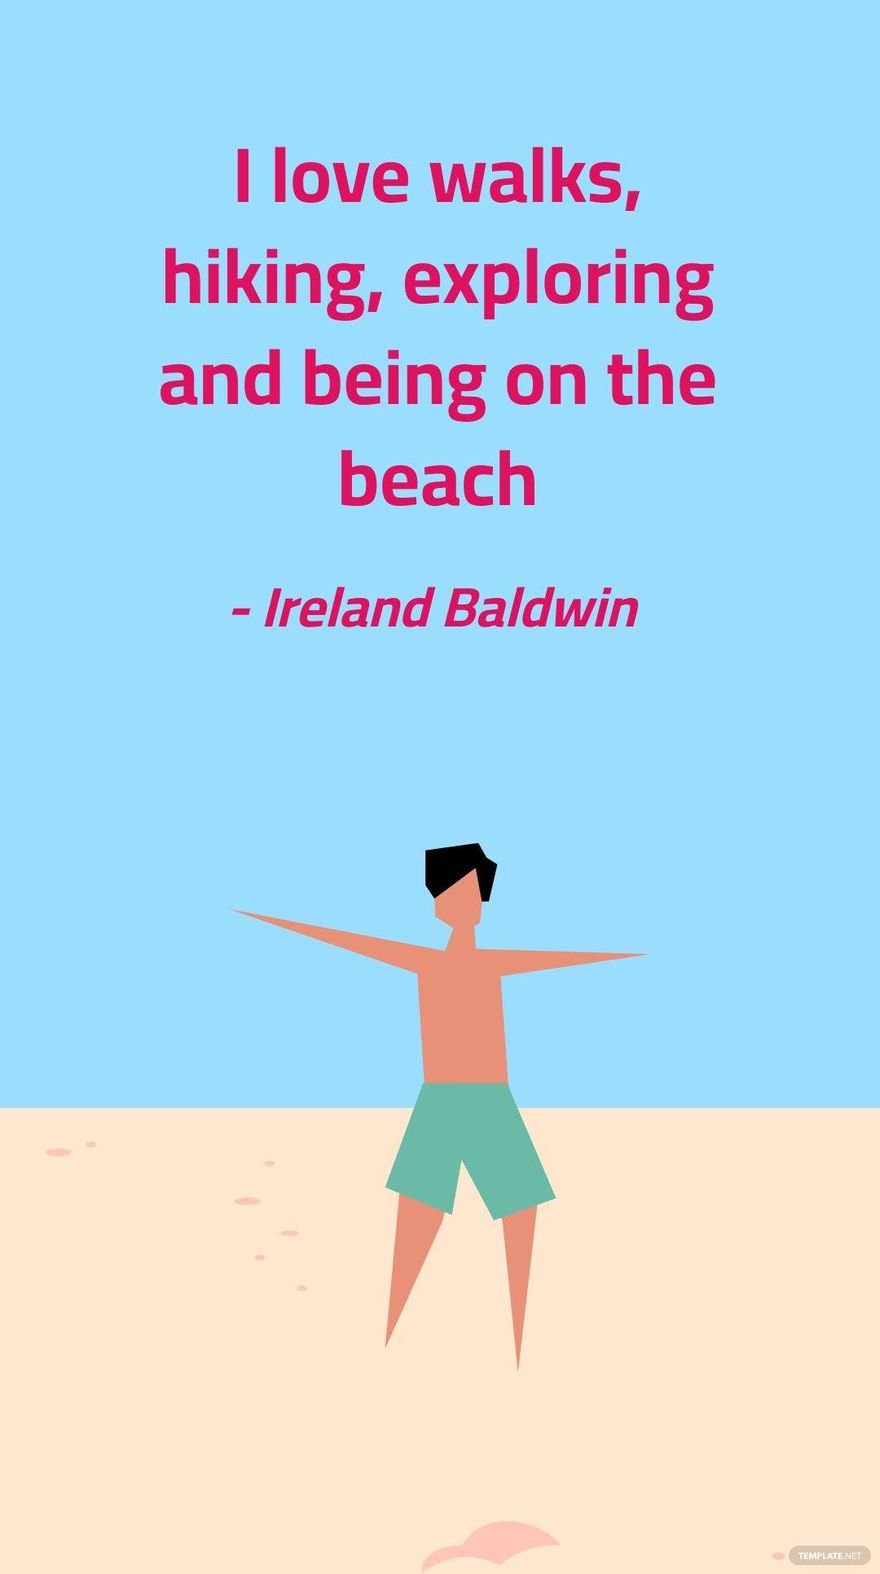 Ireland Baldwin - I love walks, hiking, exploring and being on the beach